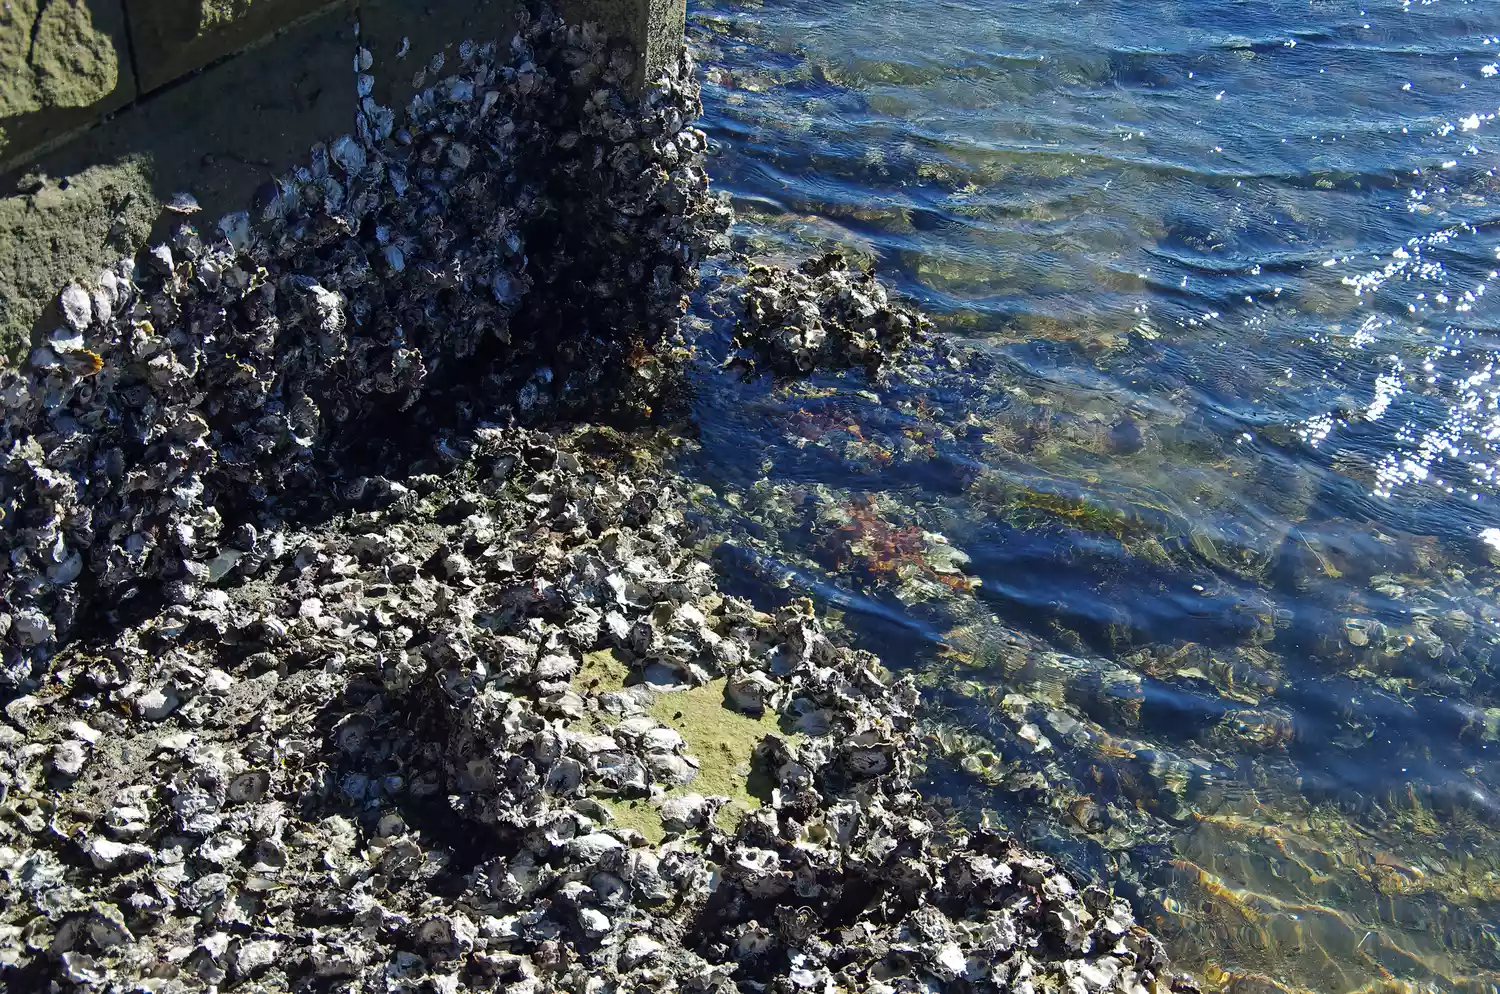 Скопления устриц на камнях и морском дне во время отлива